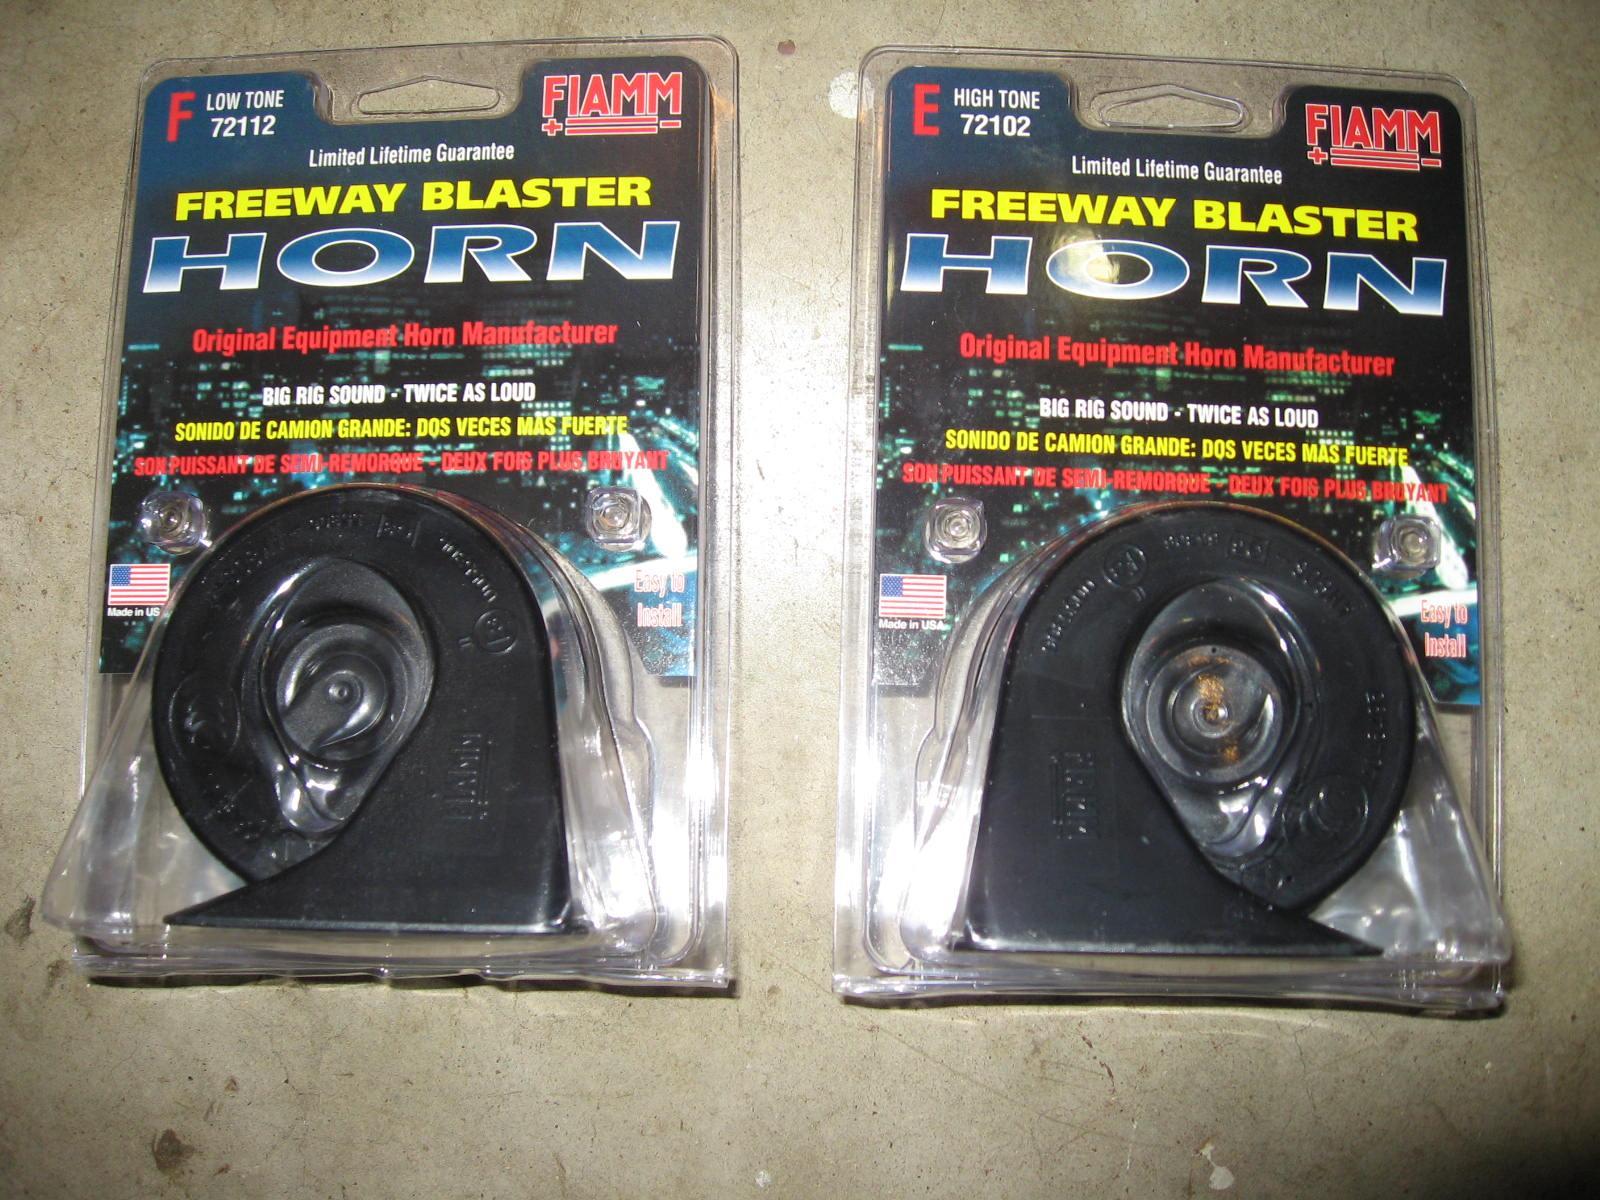 FIAMM freeway blaster, hi and low tone, $16 each